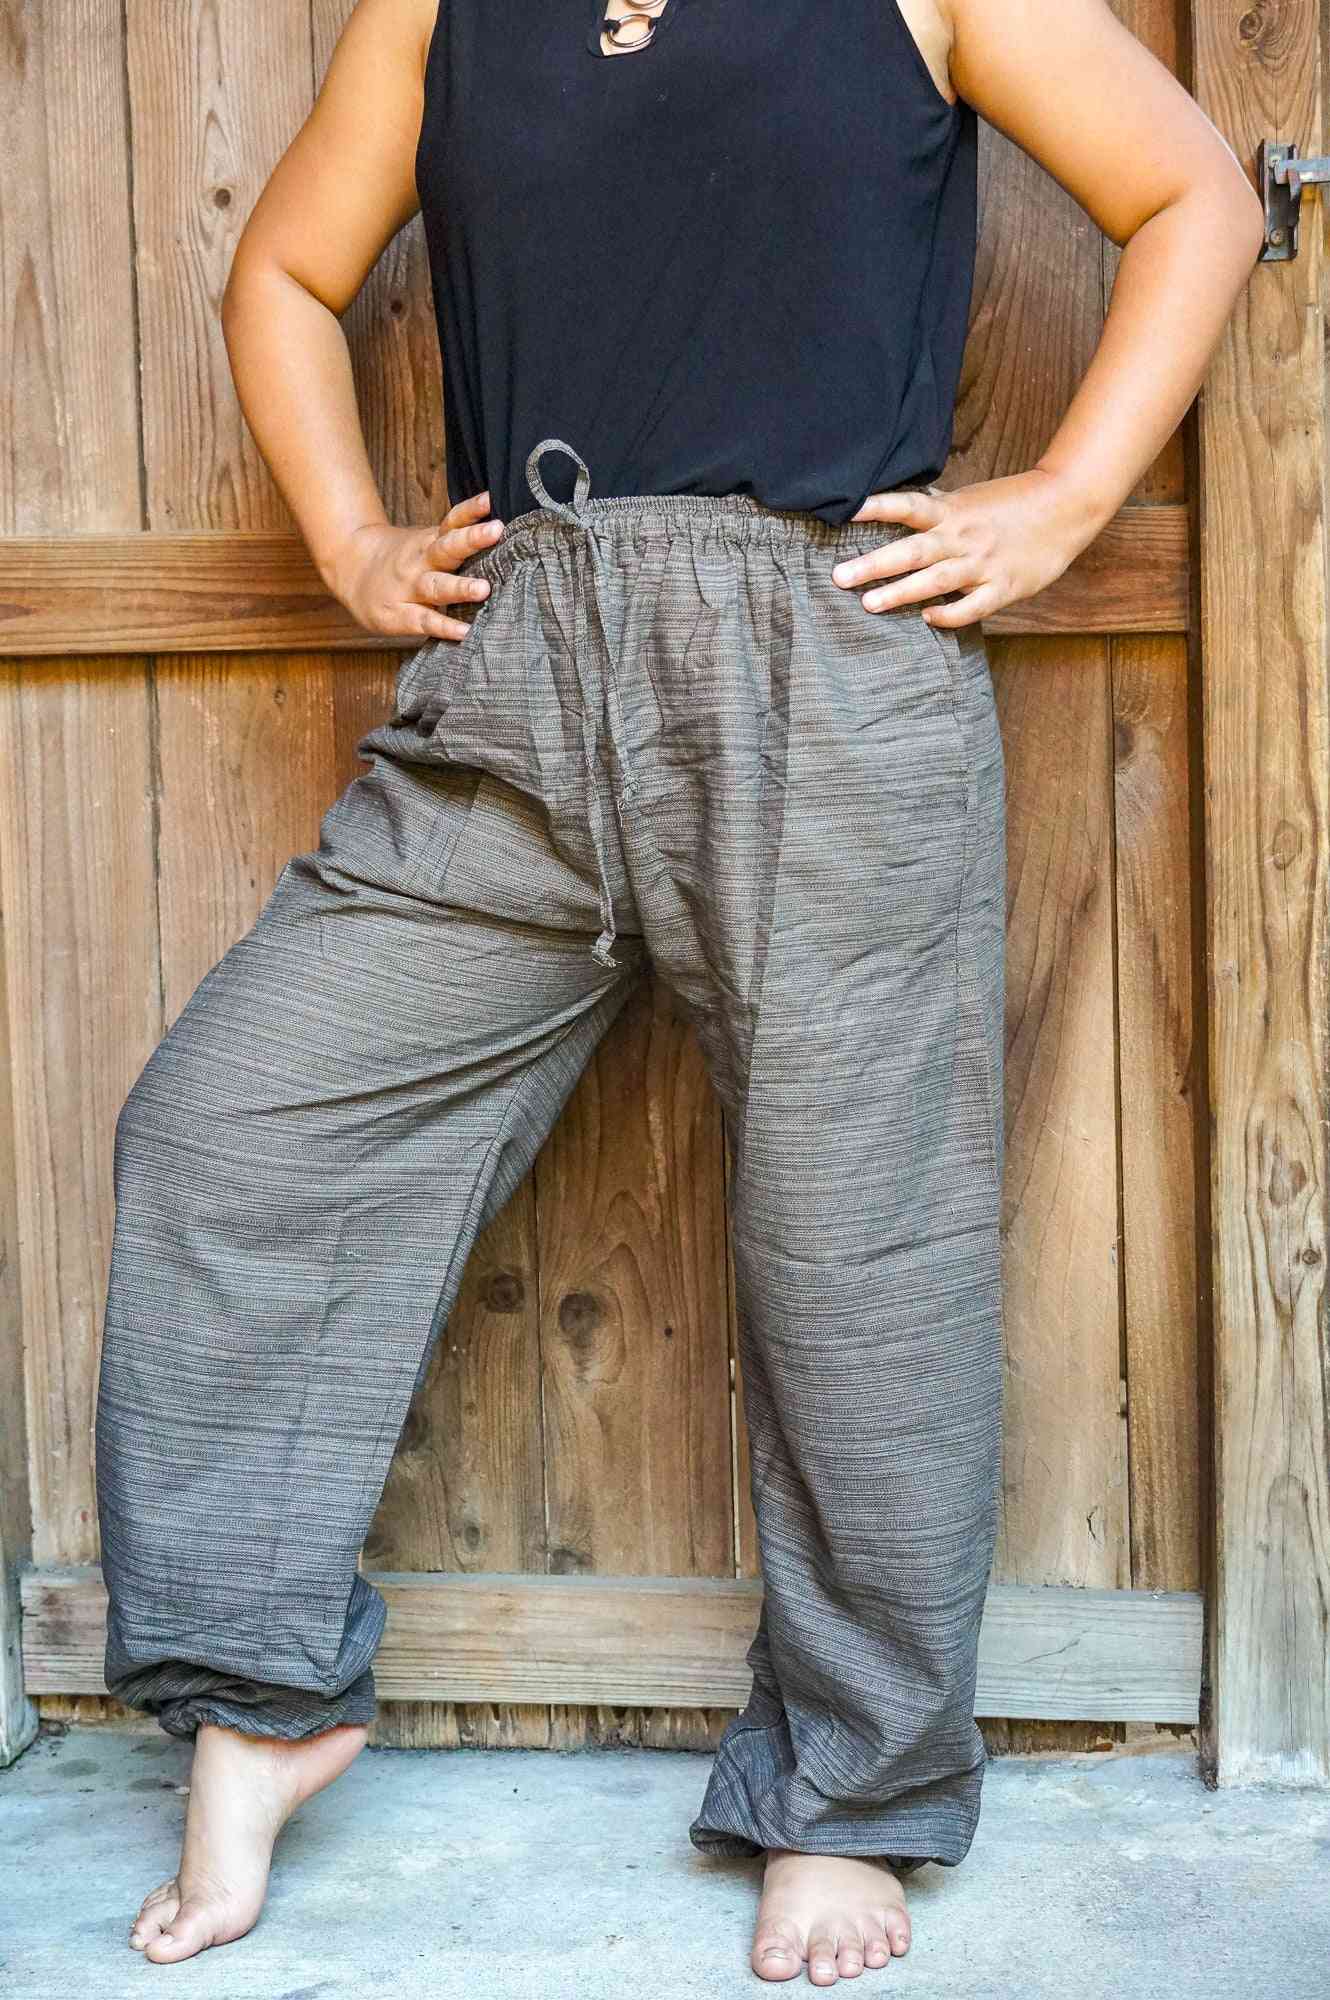 Pantaloni gipsy hippie boho di cotone